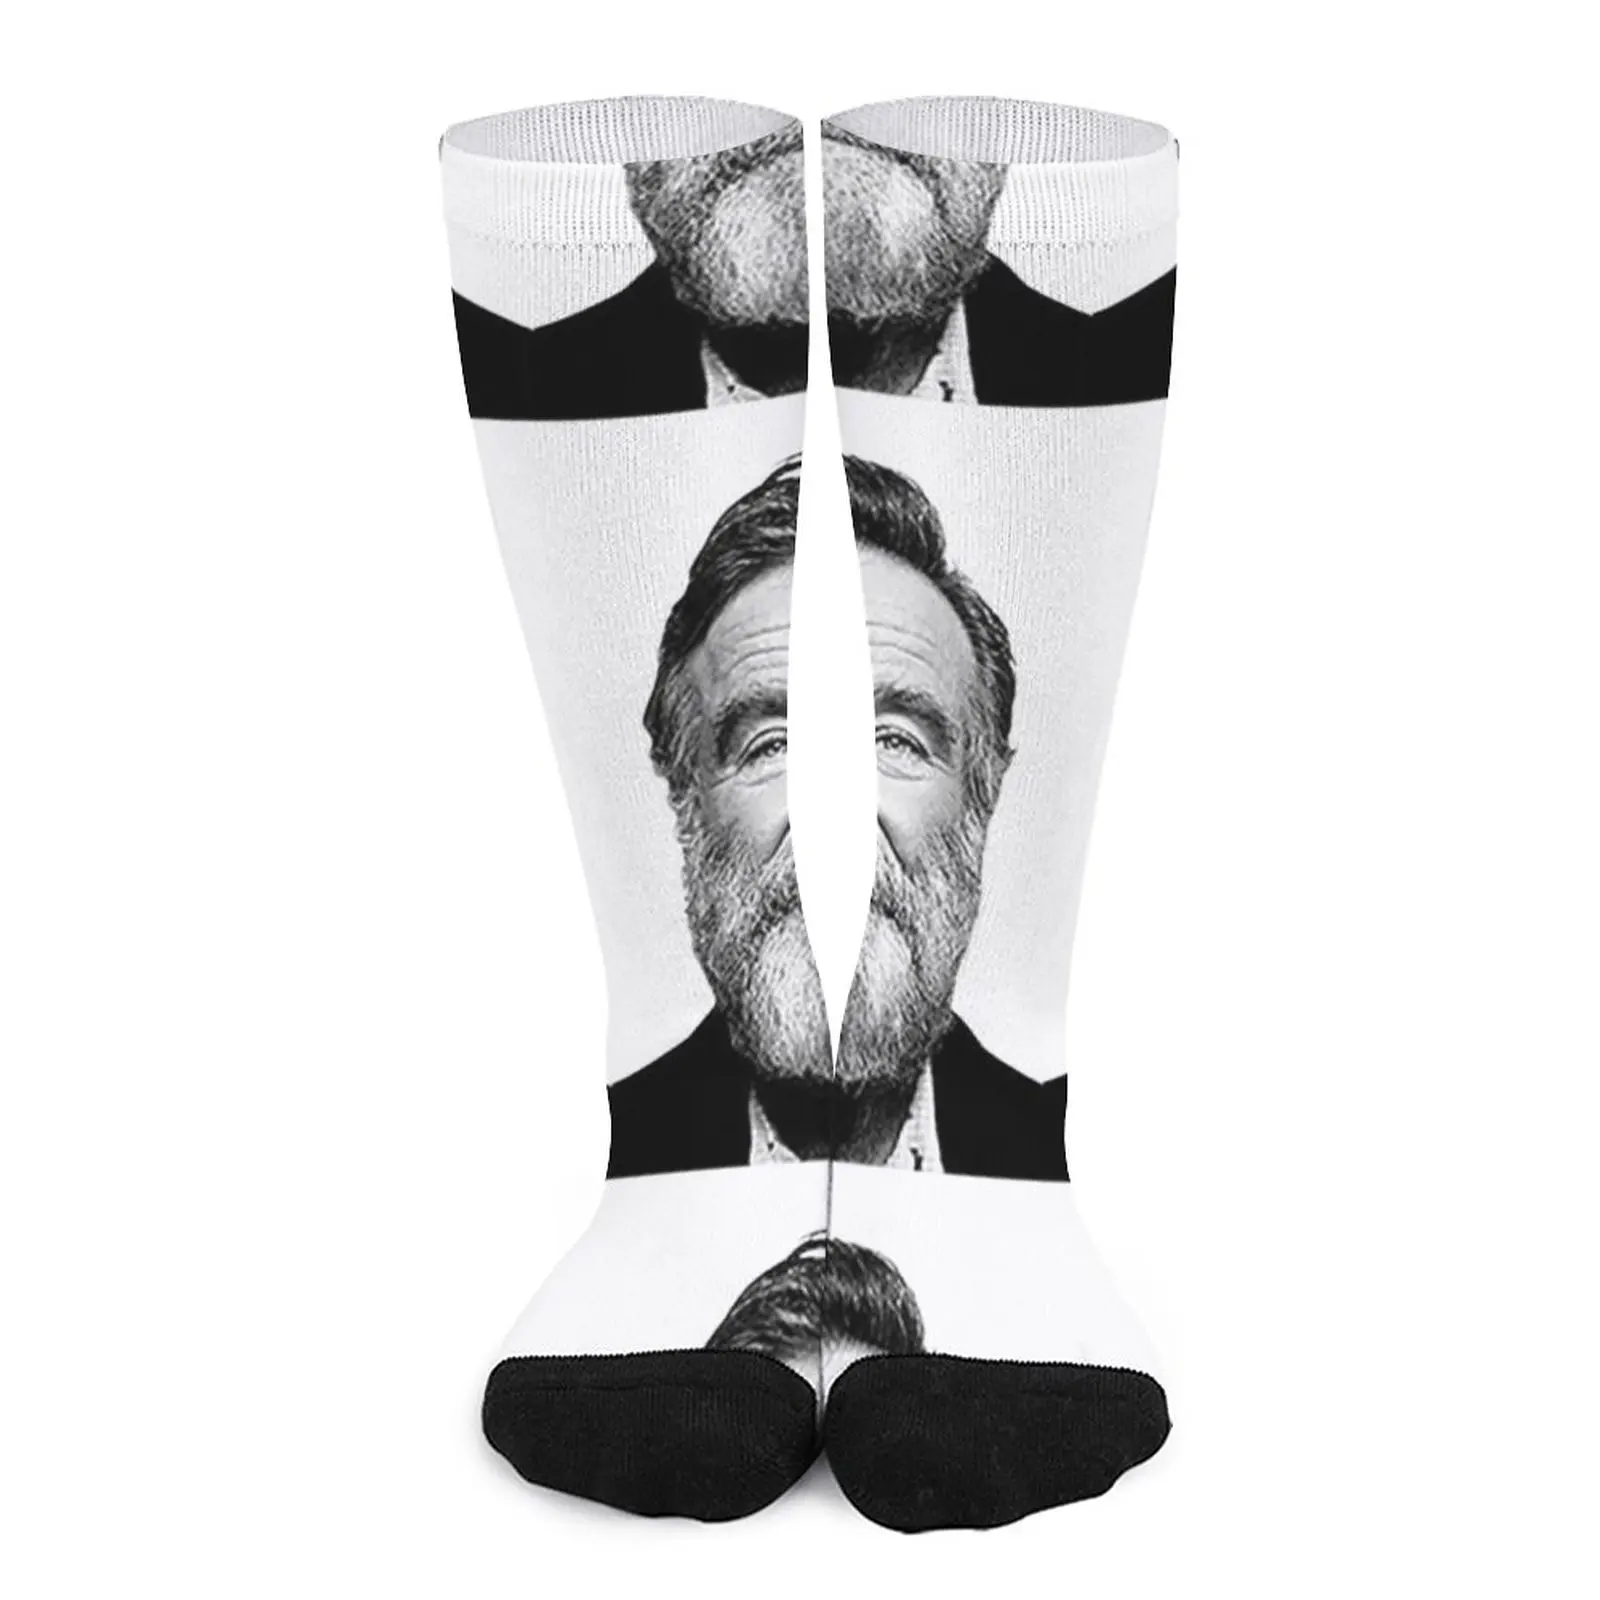 Robin Williams Socks Men's winter socks men socks winter socks men Stockings compression michelle williams unexpected 1 cd